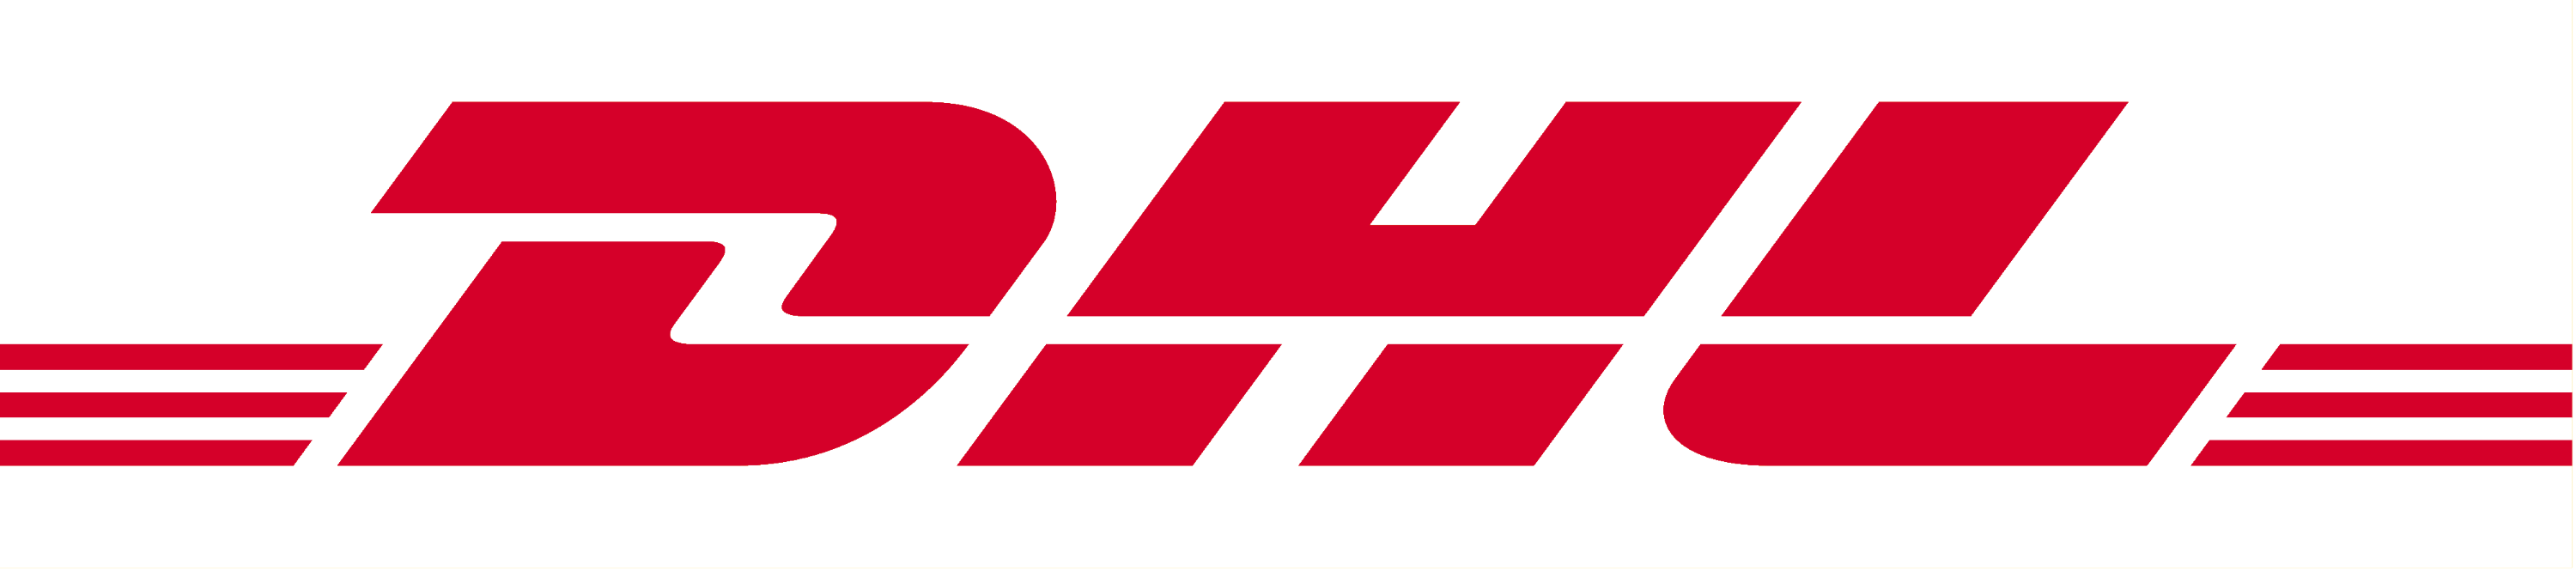 dhl logo  - DHL Logo